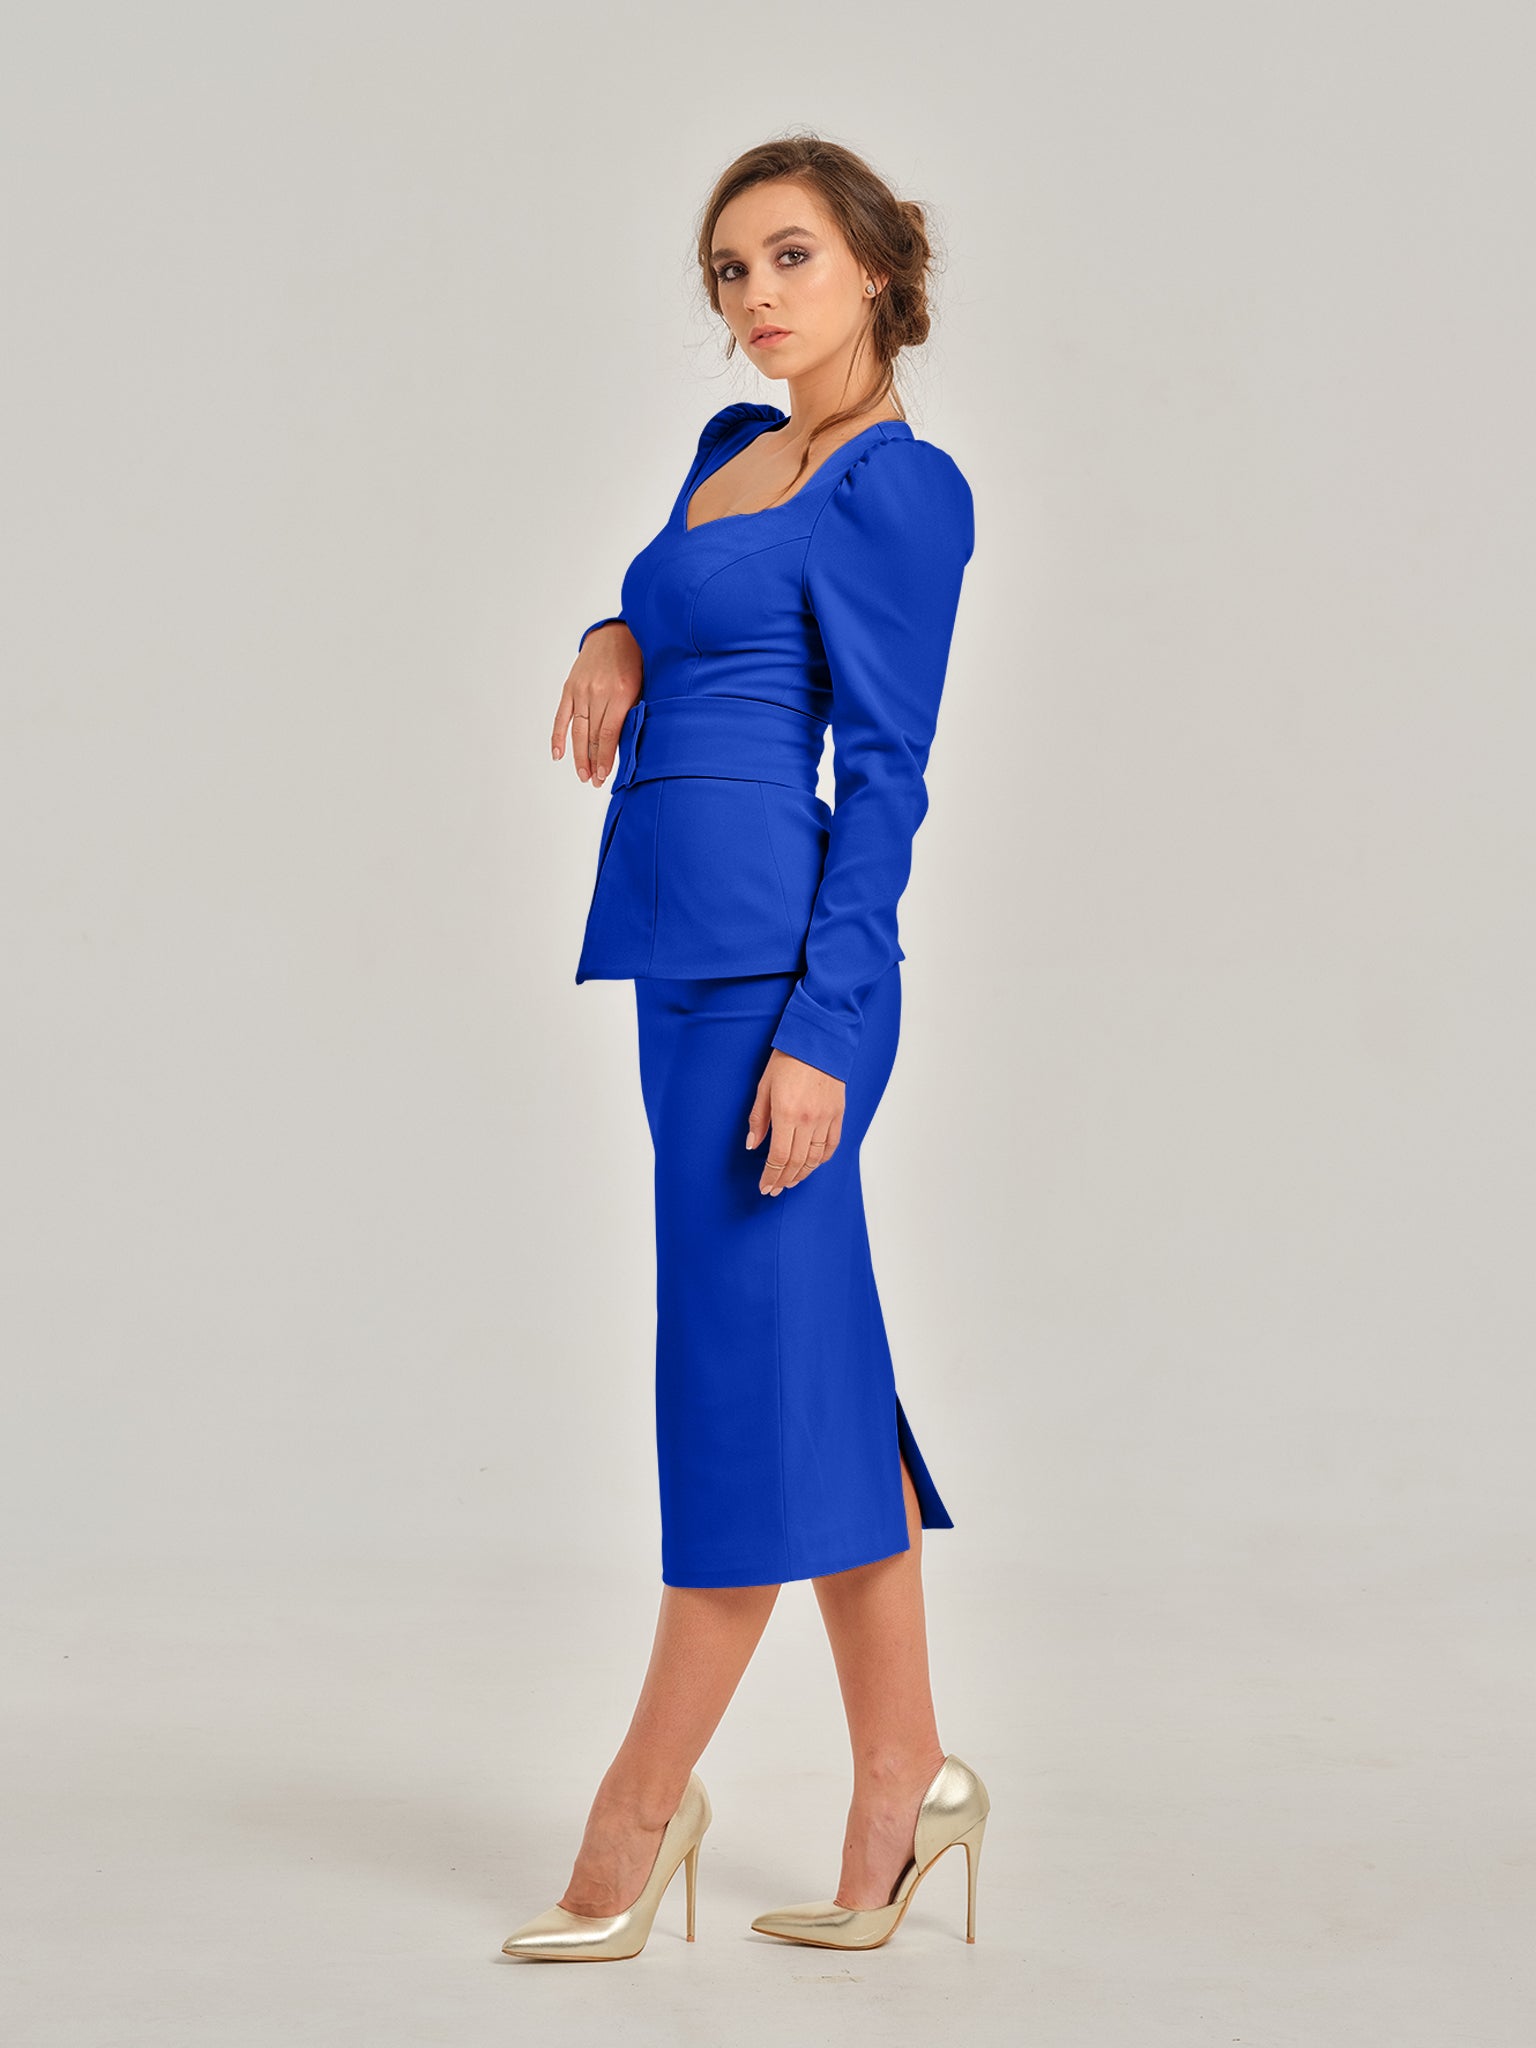 Royal Azure Sweetheart Blouse by Tia Dorraine Women's Luxury Fashion Designer Clothing Brand